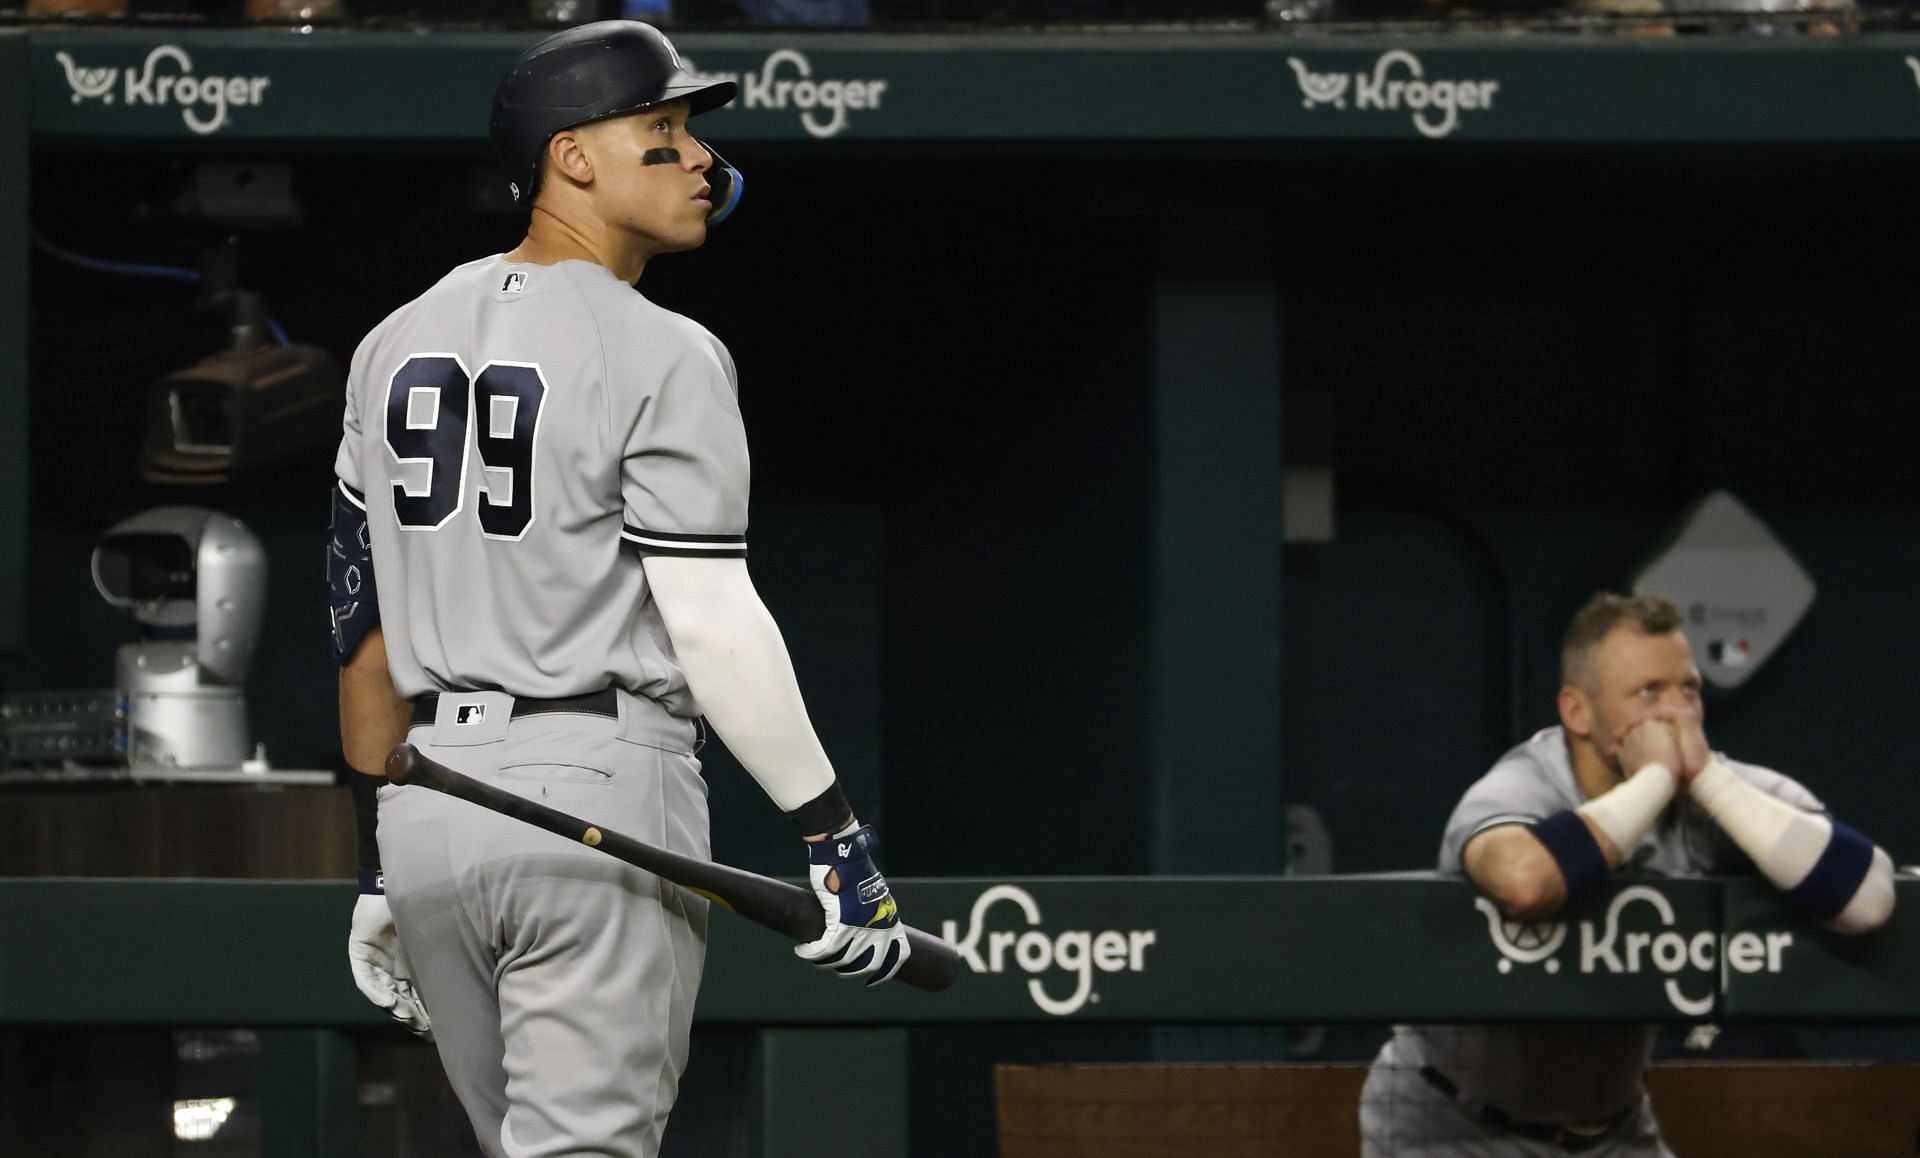 Yankees slugger Aaron Judge doesn't take batting practice Tuesday